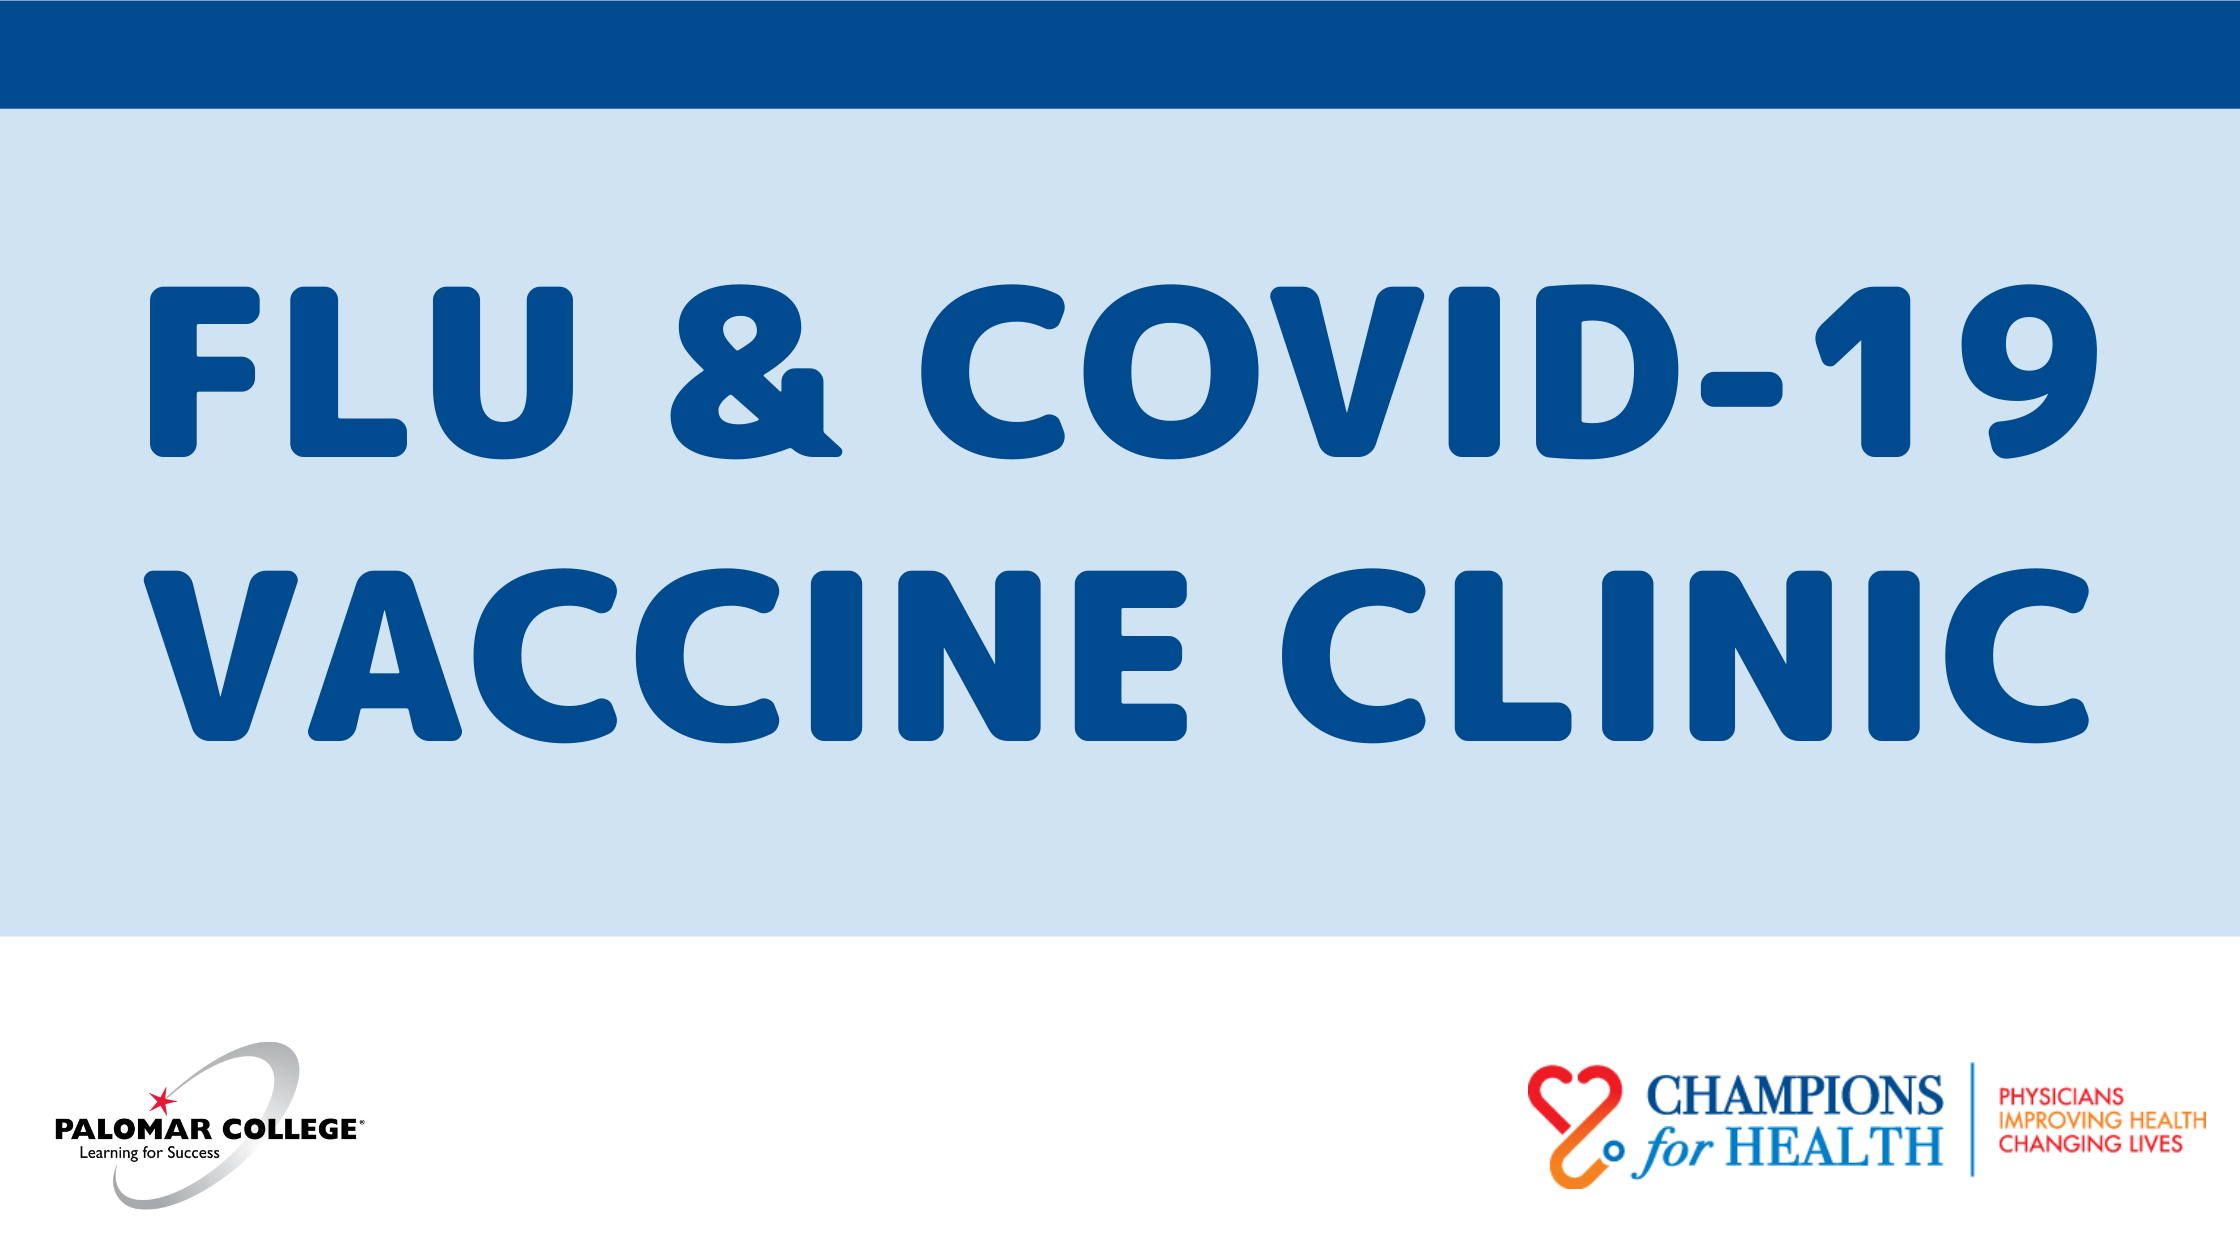 Flu & COVID-19 vaccine clinic banner